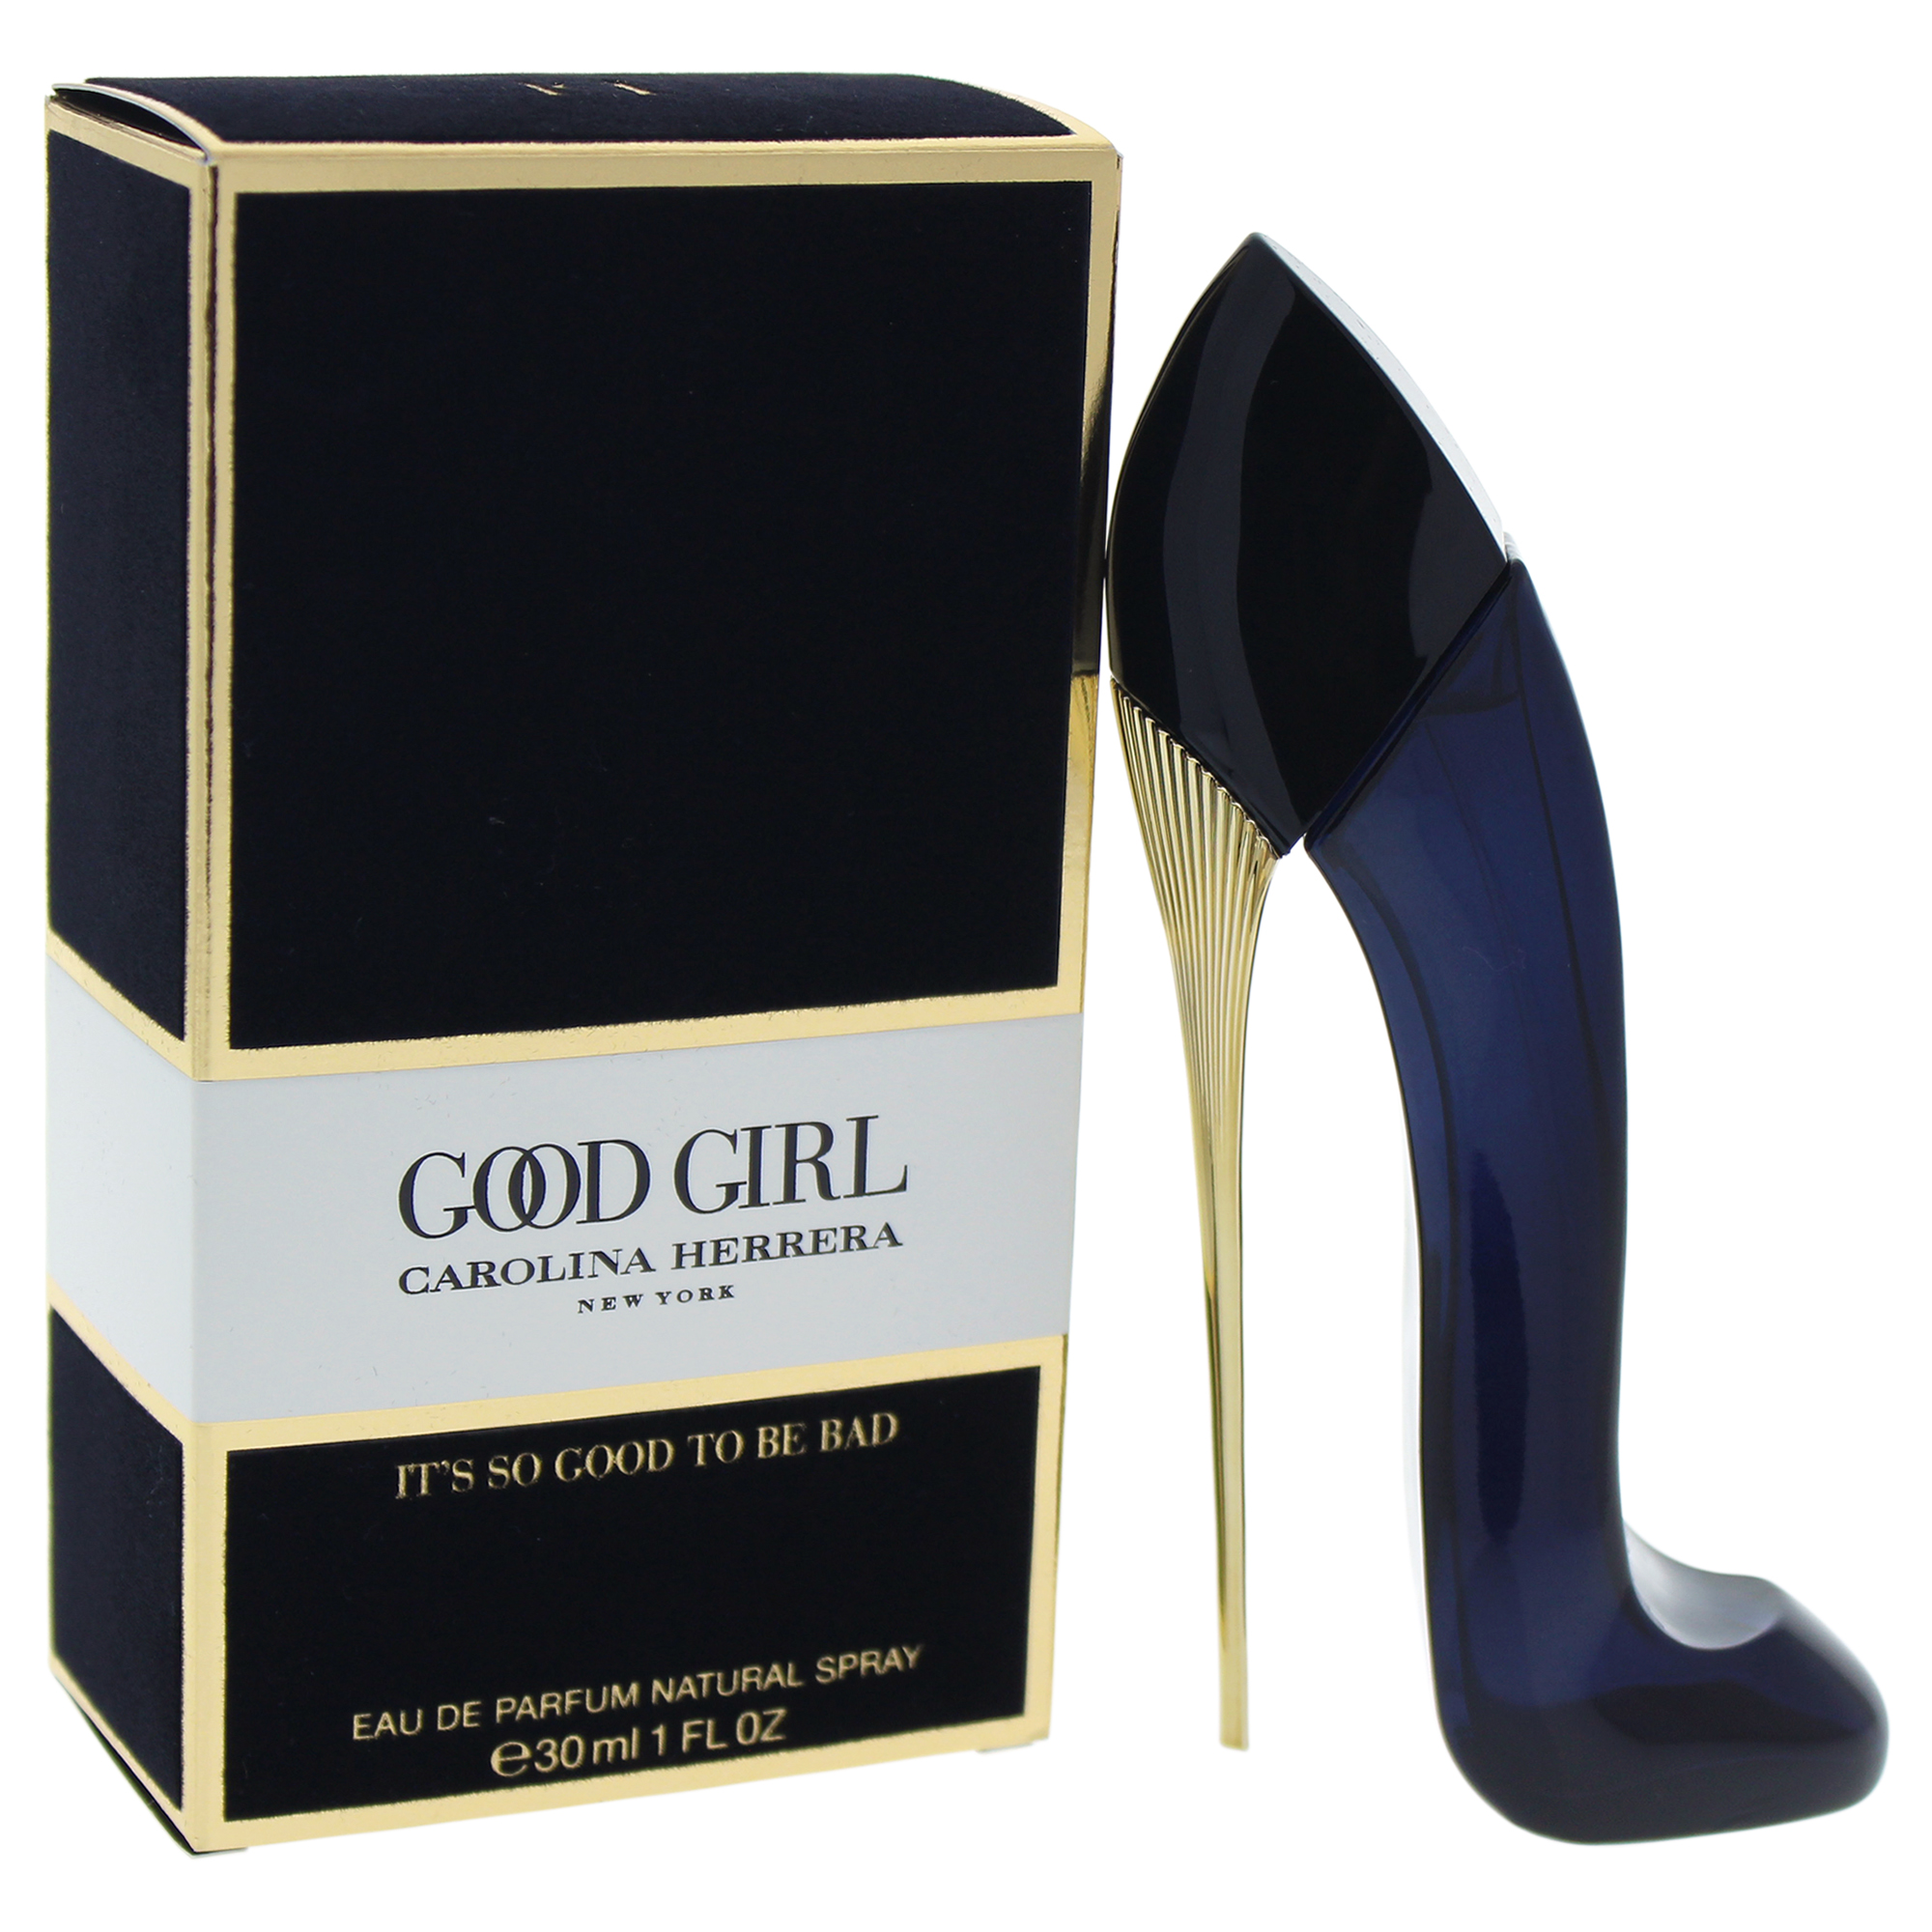 Carolina Herrera Good Girl Eau de Parfum, Perfume for Women, 1.0 Oz - image 2 of 2